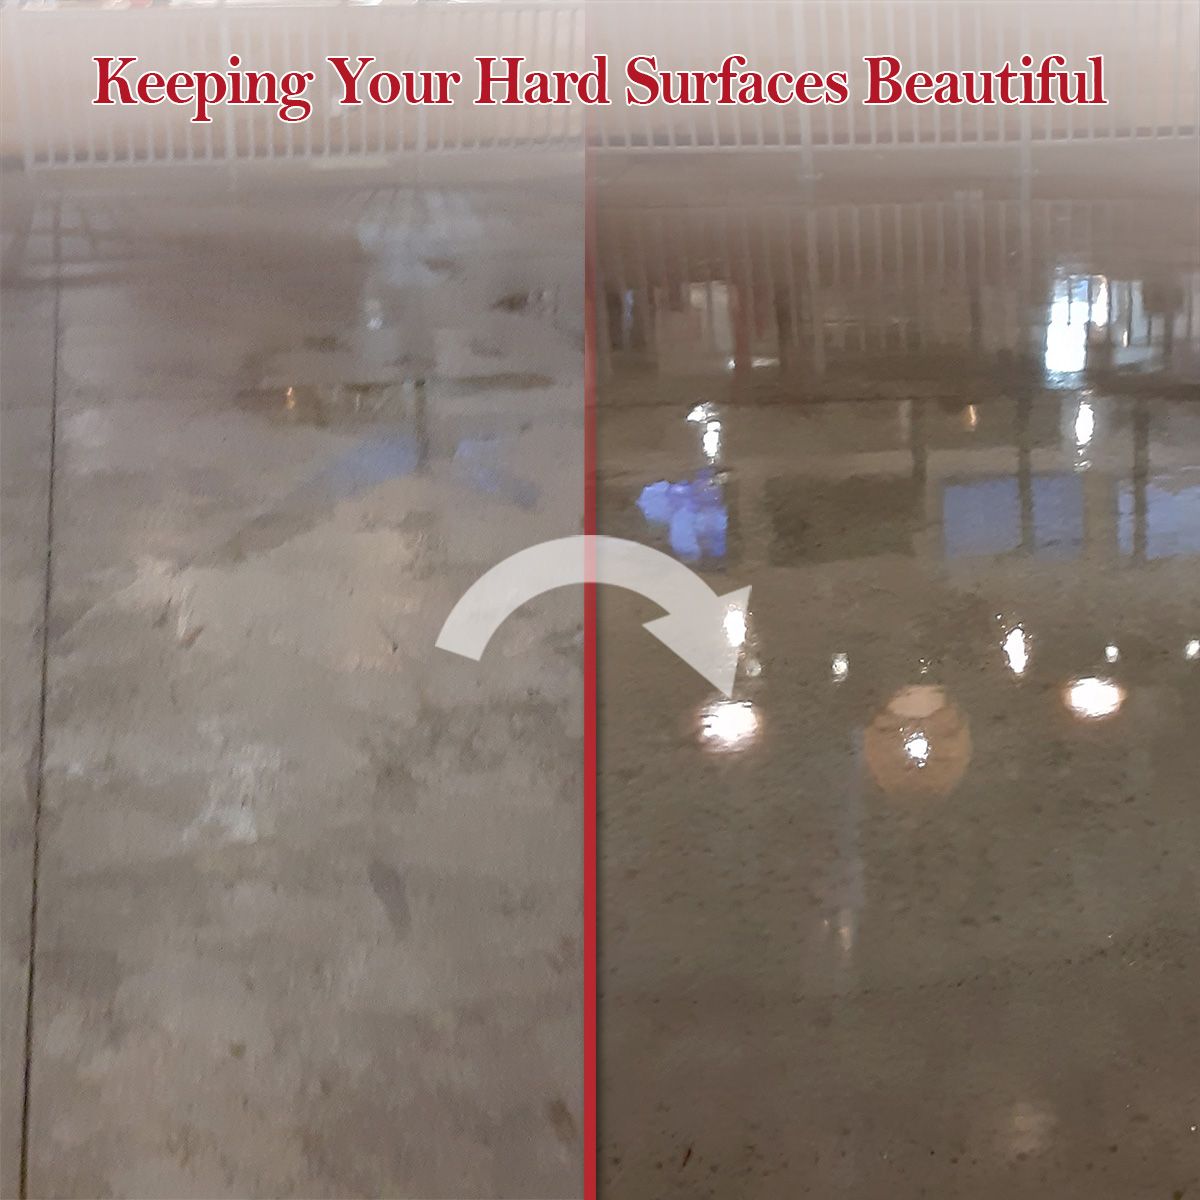 Keep Your Hard Surfaces Beautiful